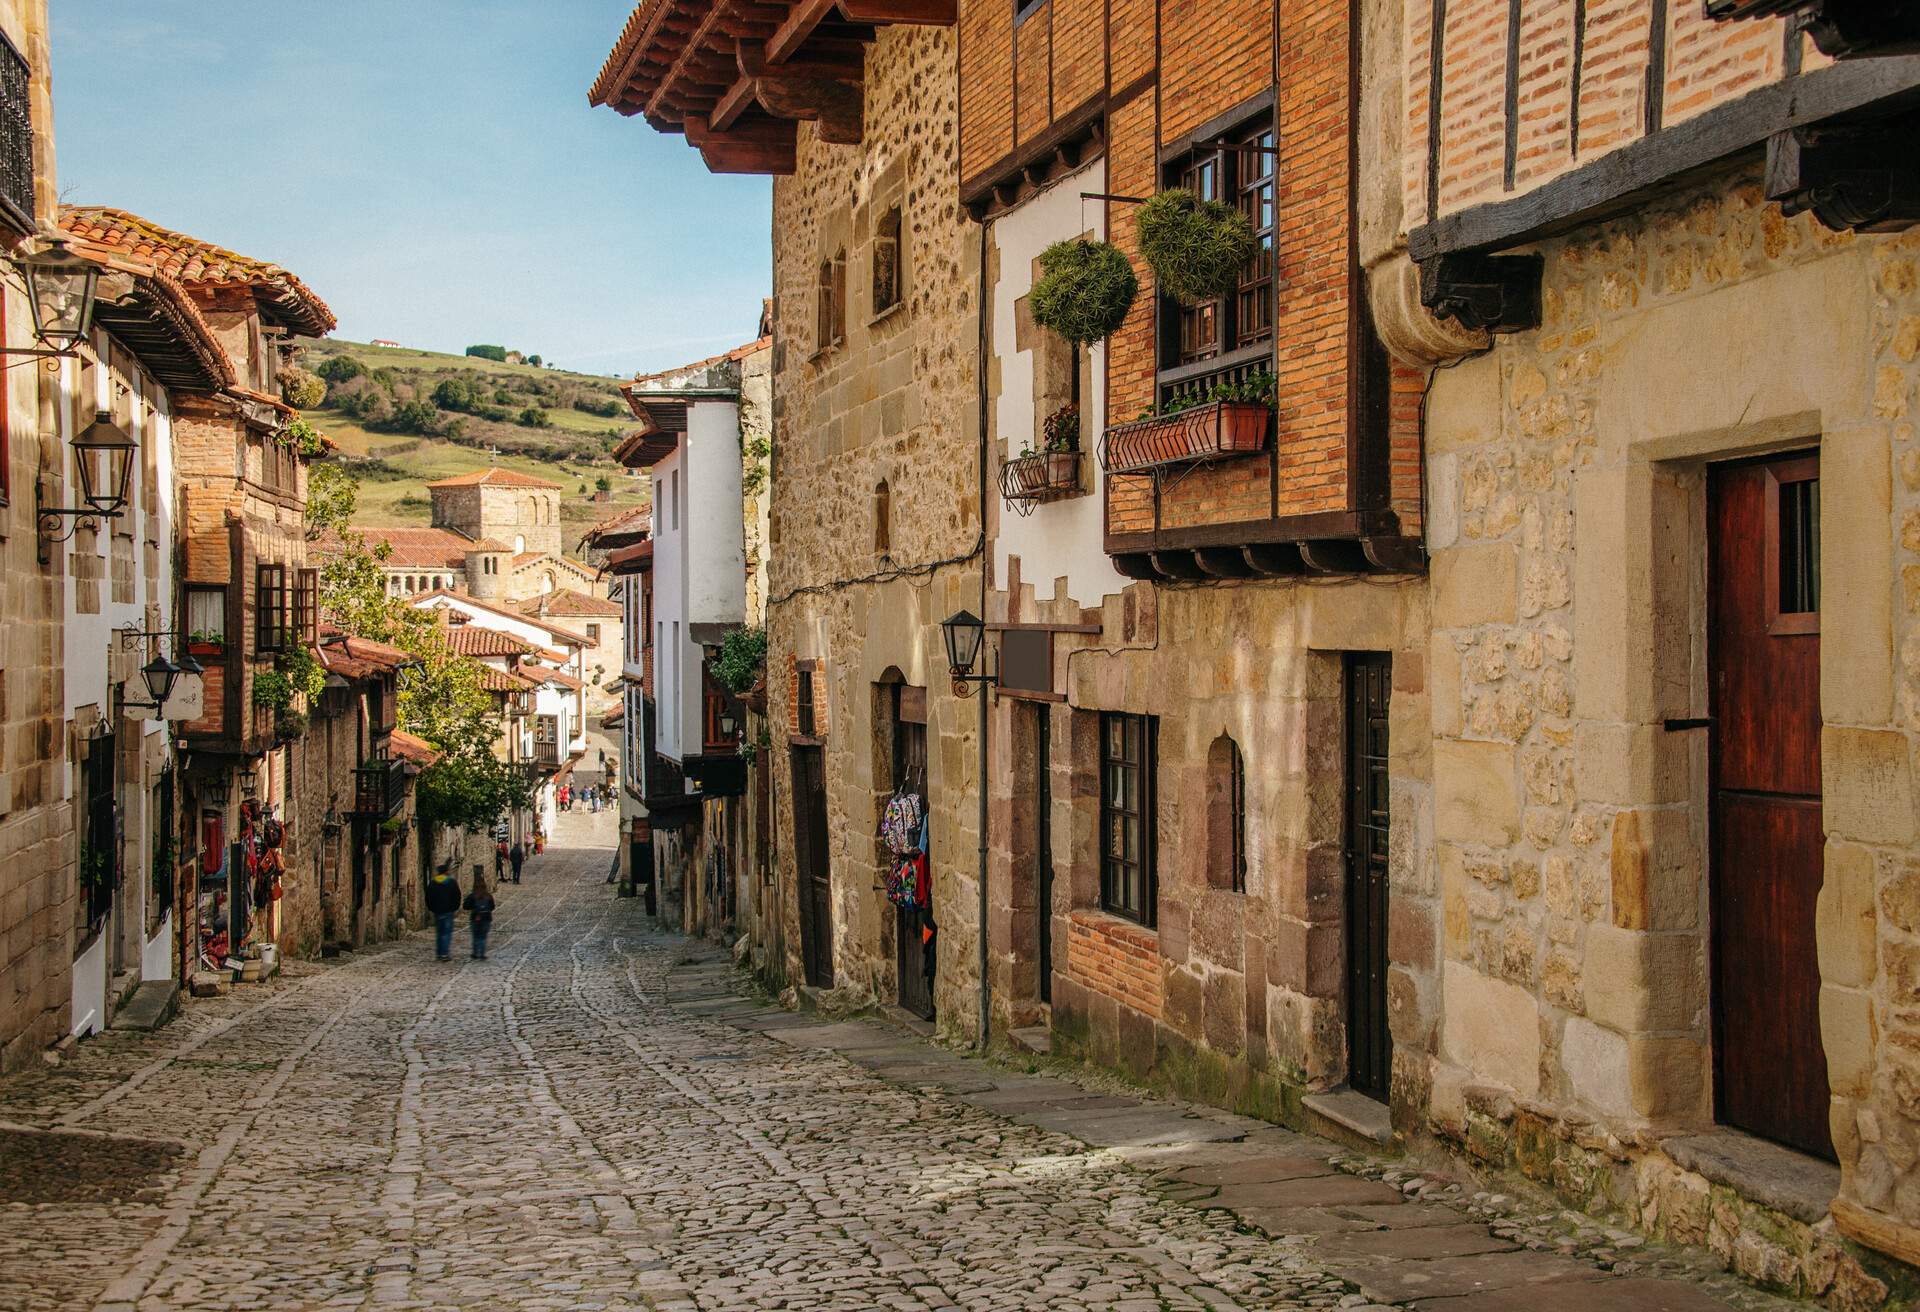 A street in Santillana del Mar, an important touristic destination in Cantabria, Spain